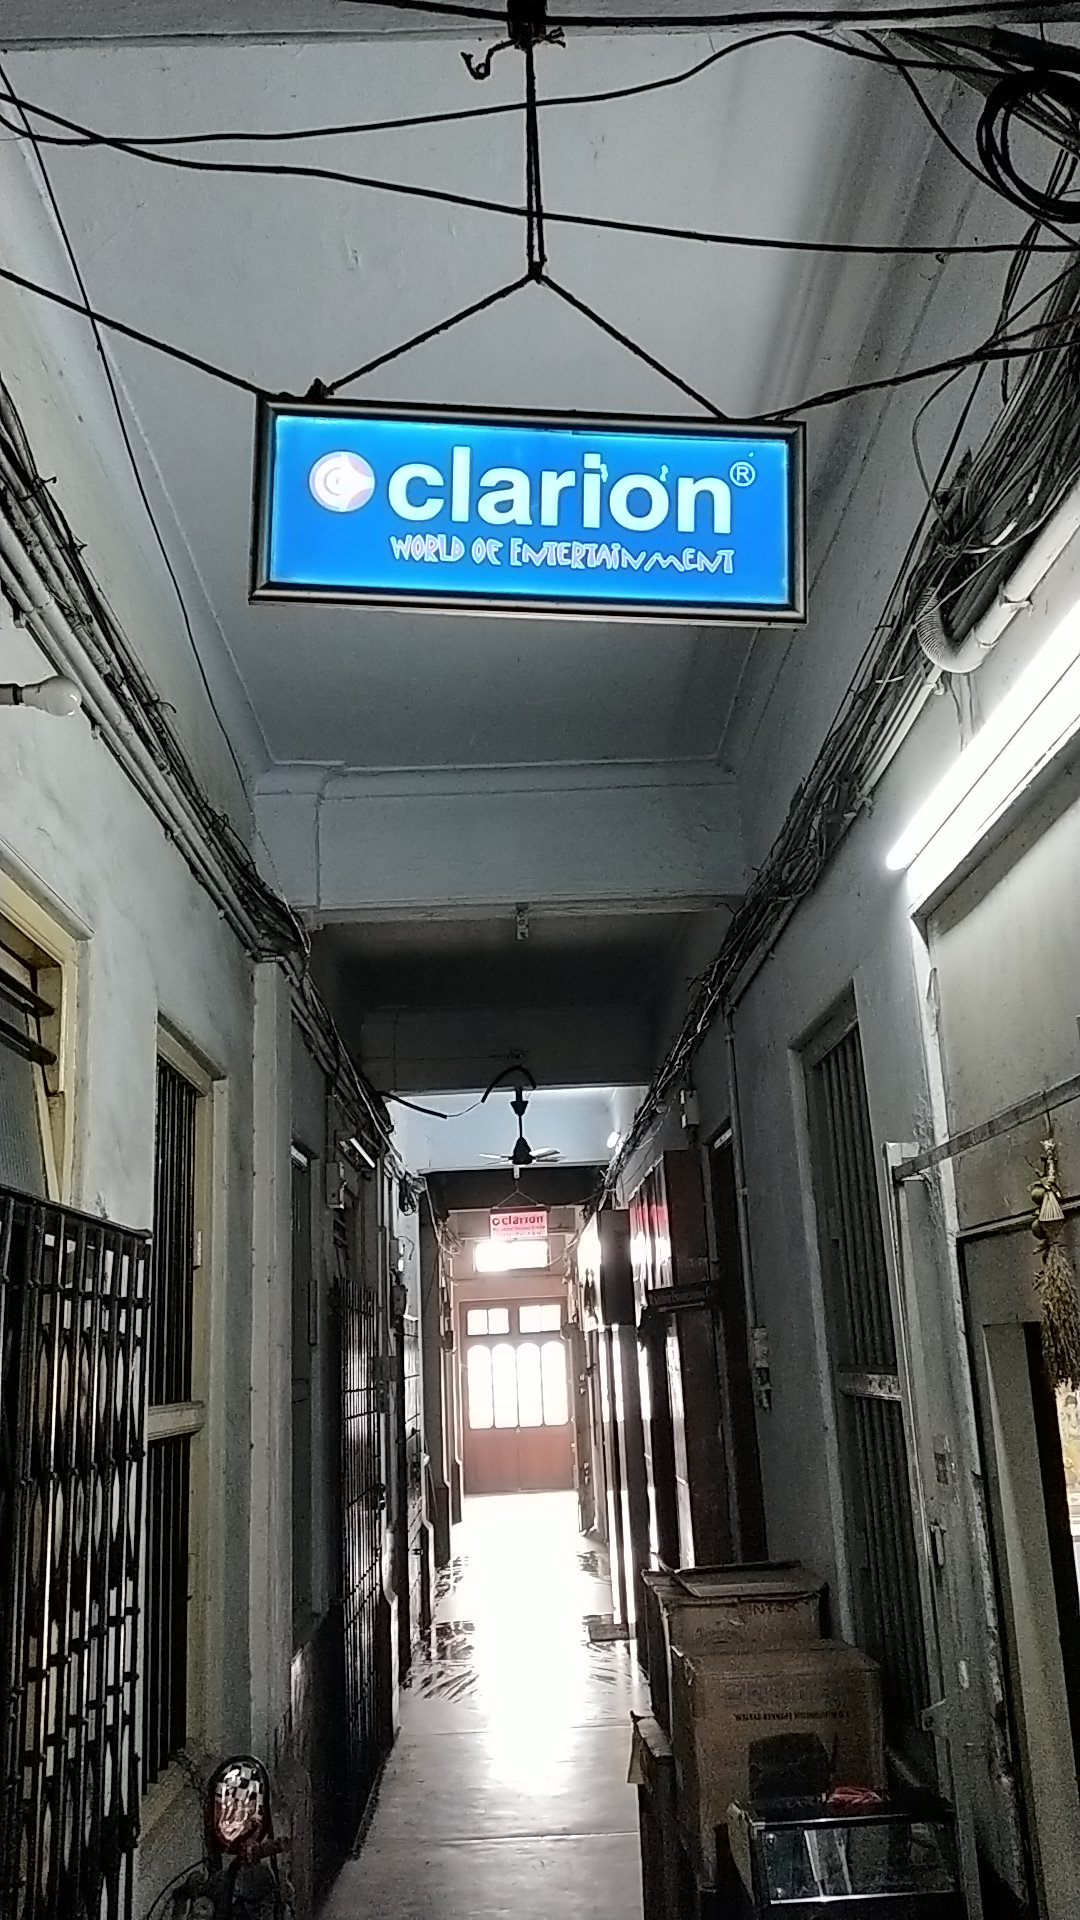 Clarion Service Centre